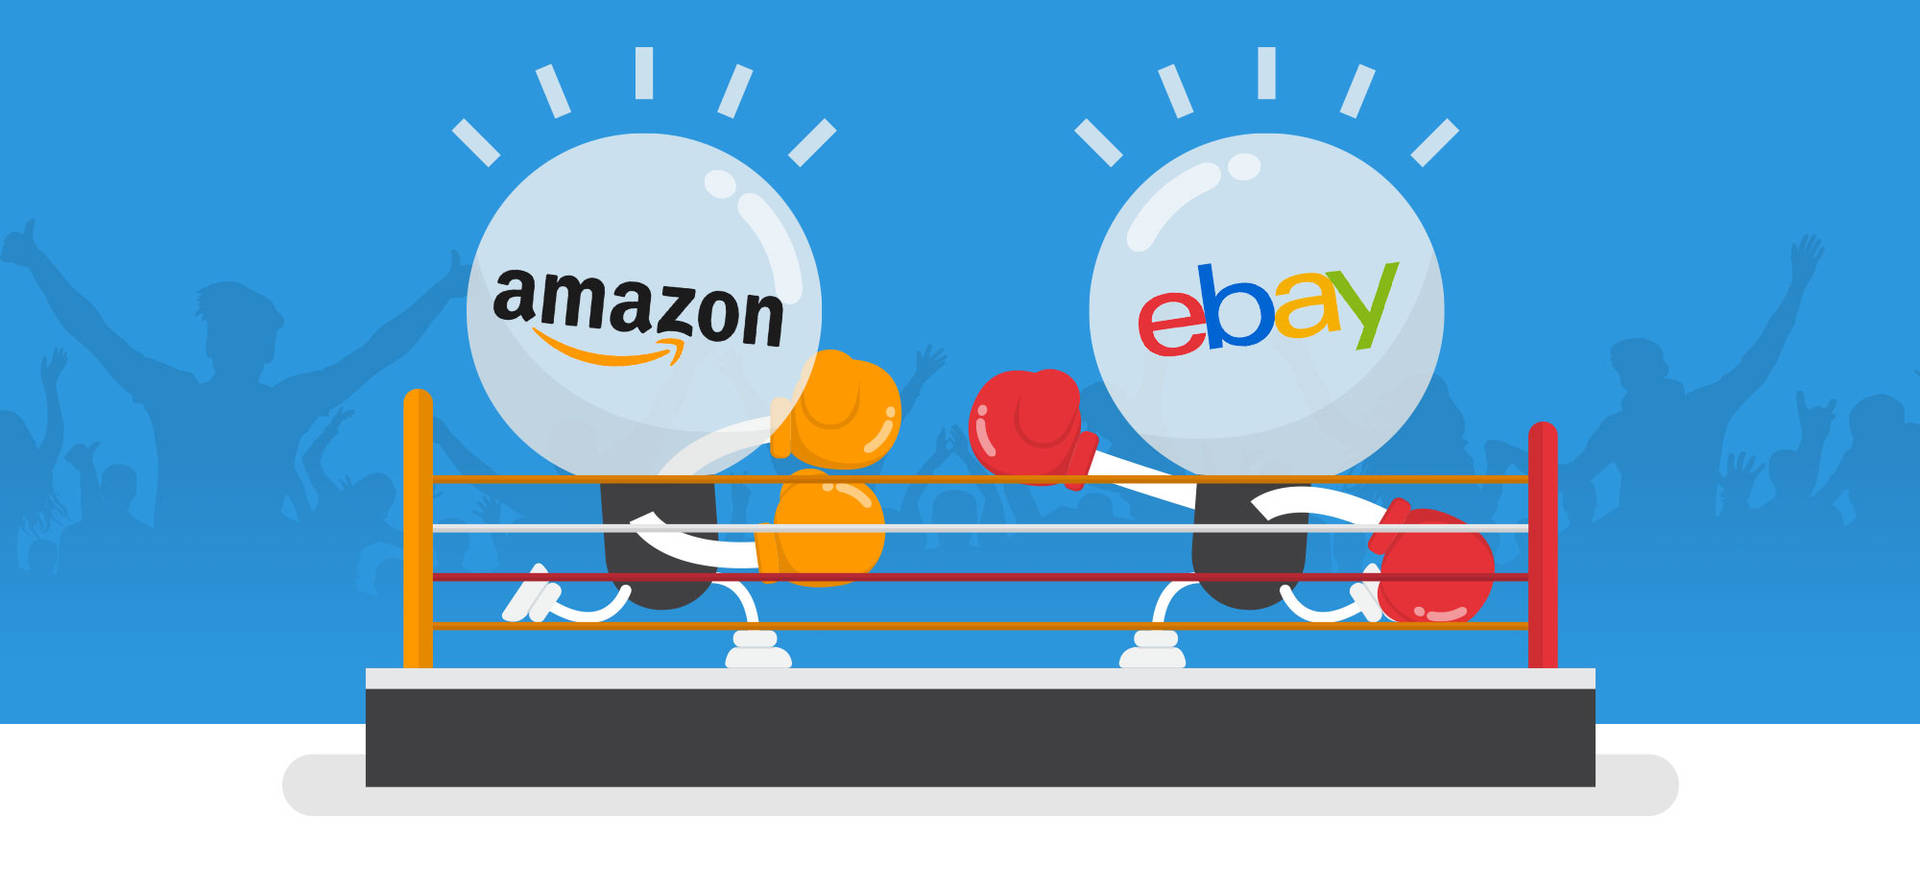 Amazon Vs Ebay Wallpaper